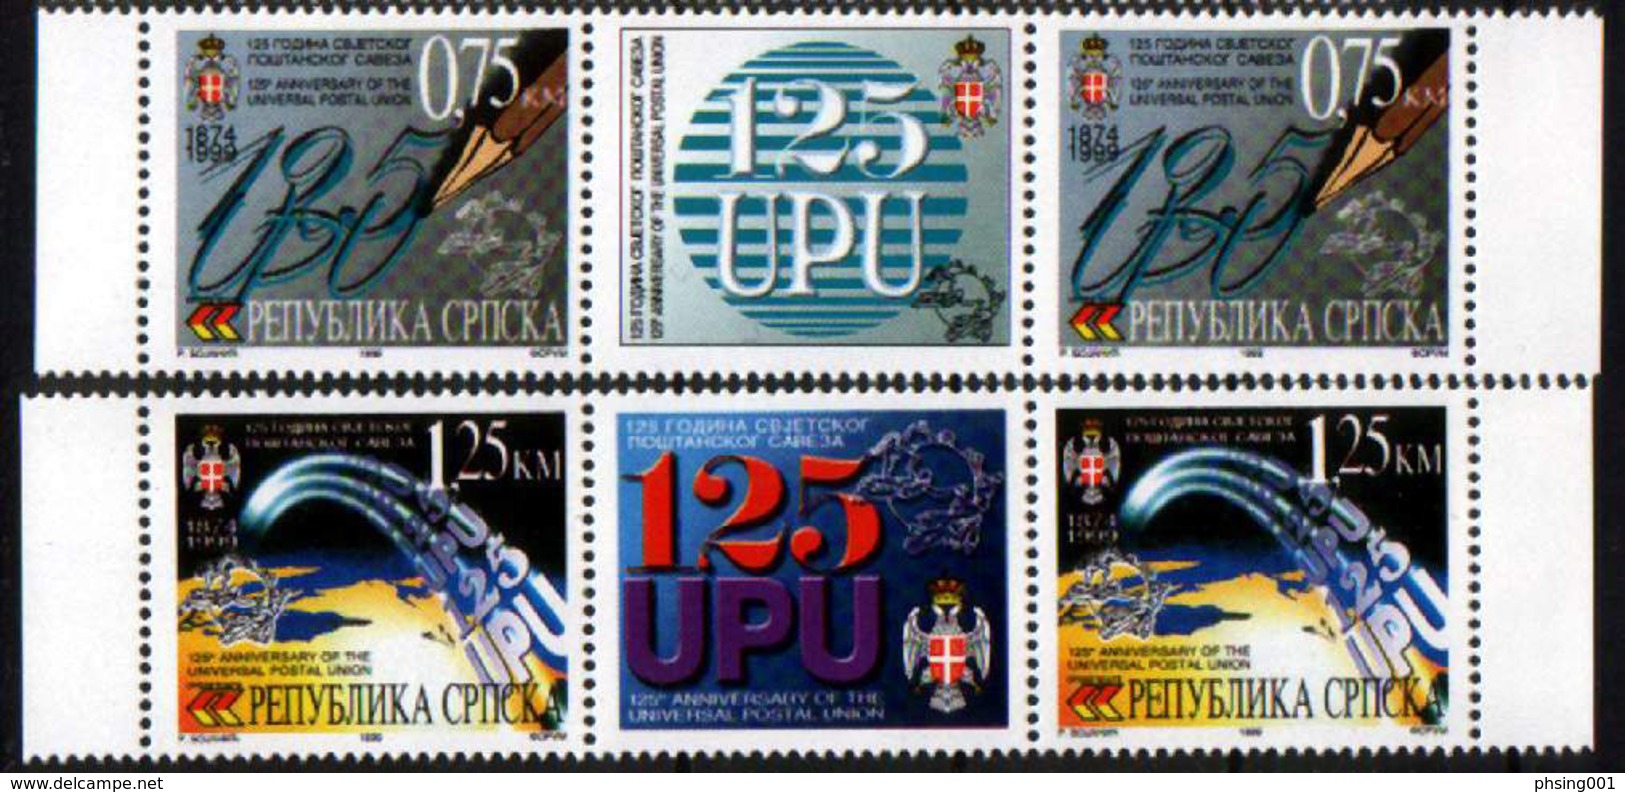 Bosnia Serbia 1999 125 Years Anniversary UPU, Middle Row MNH - WPV (Weltpostverein)